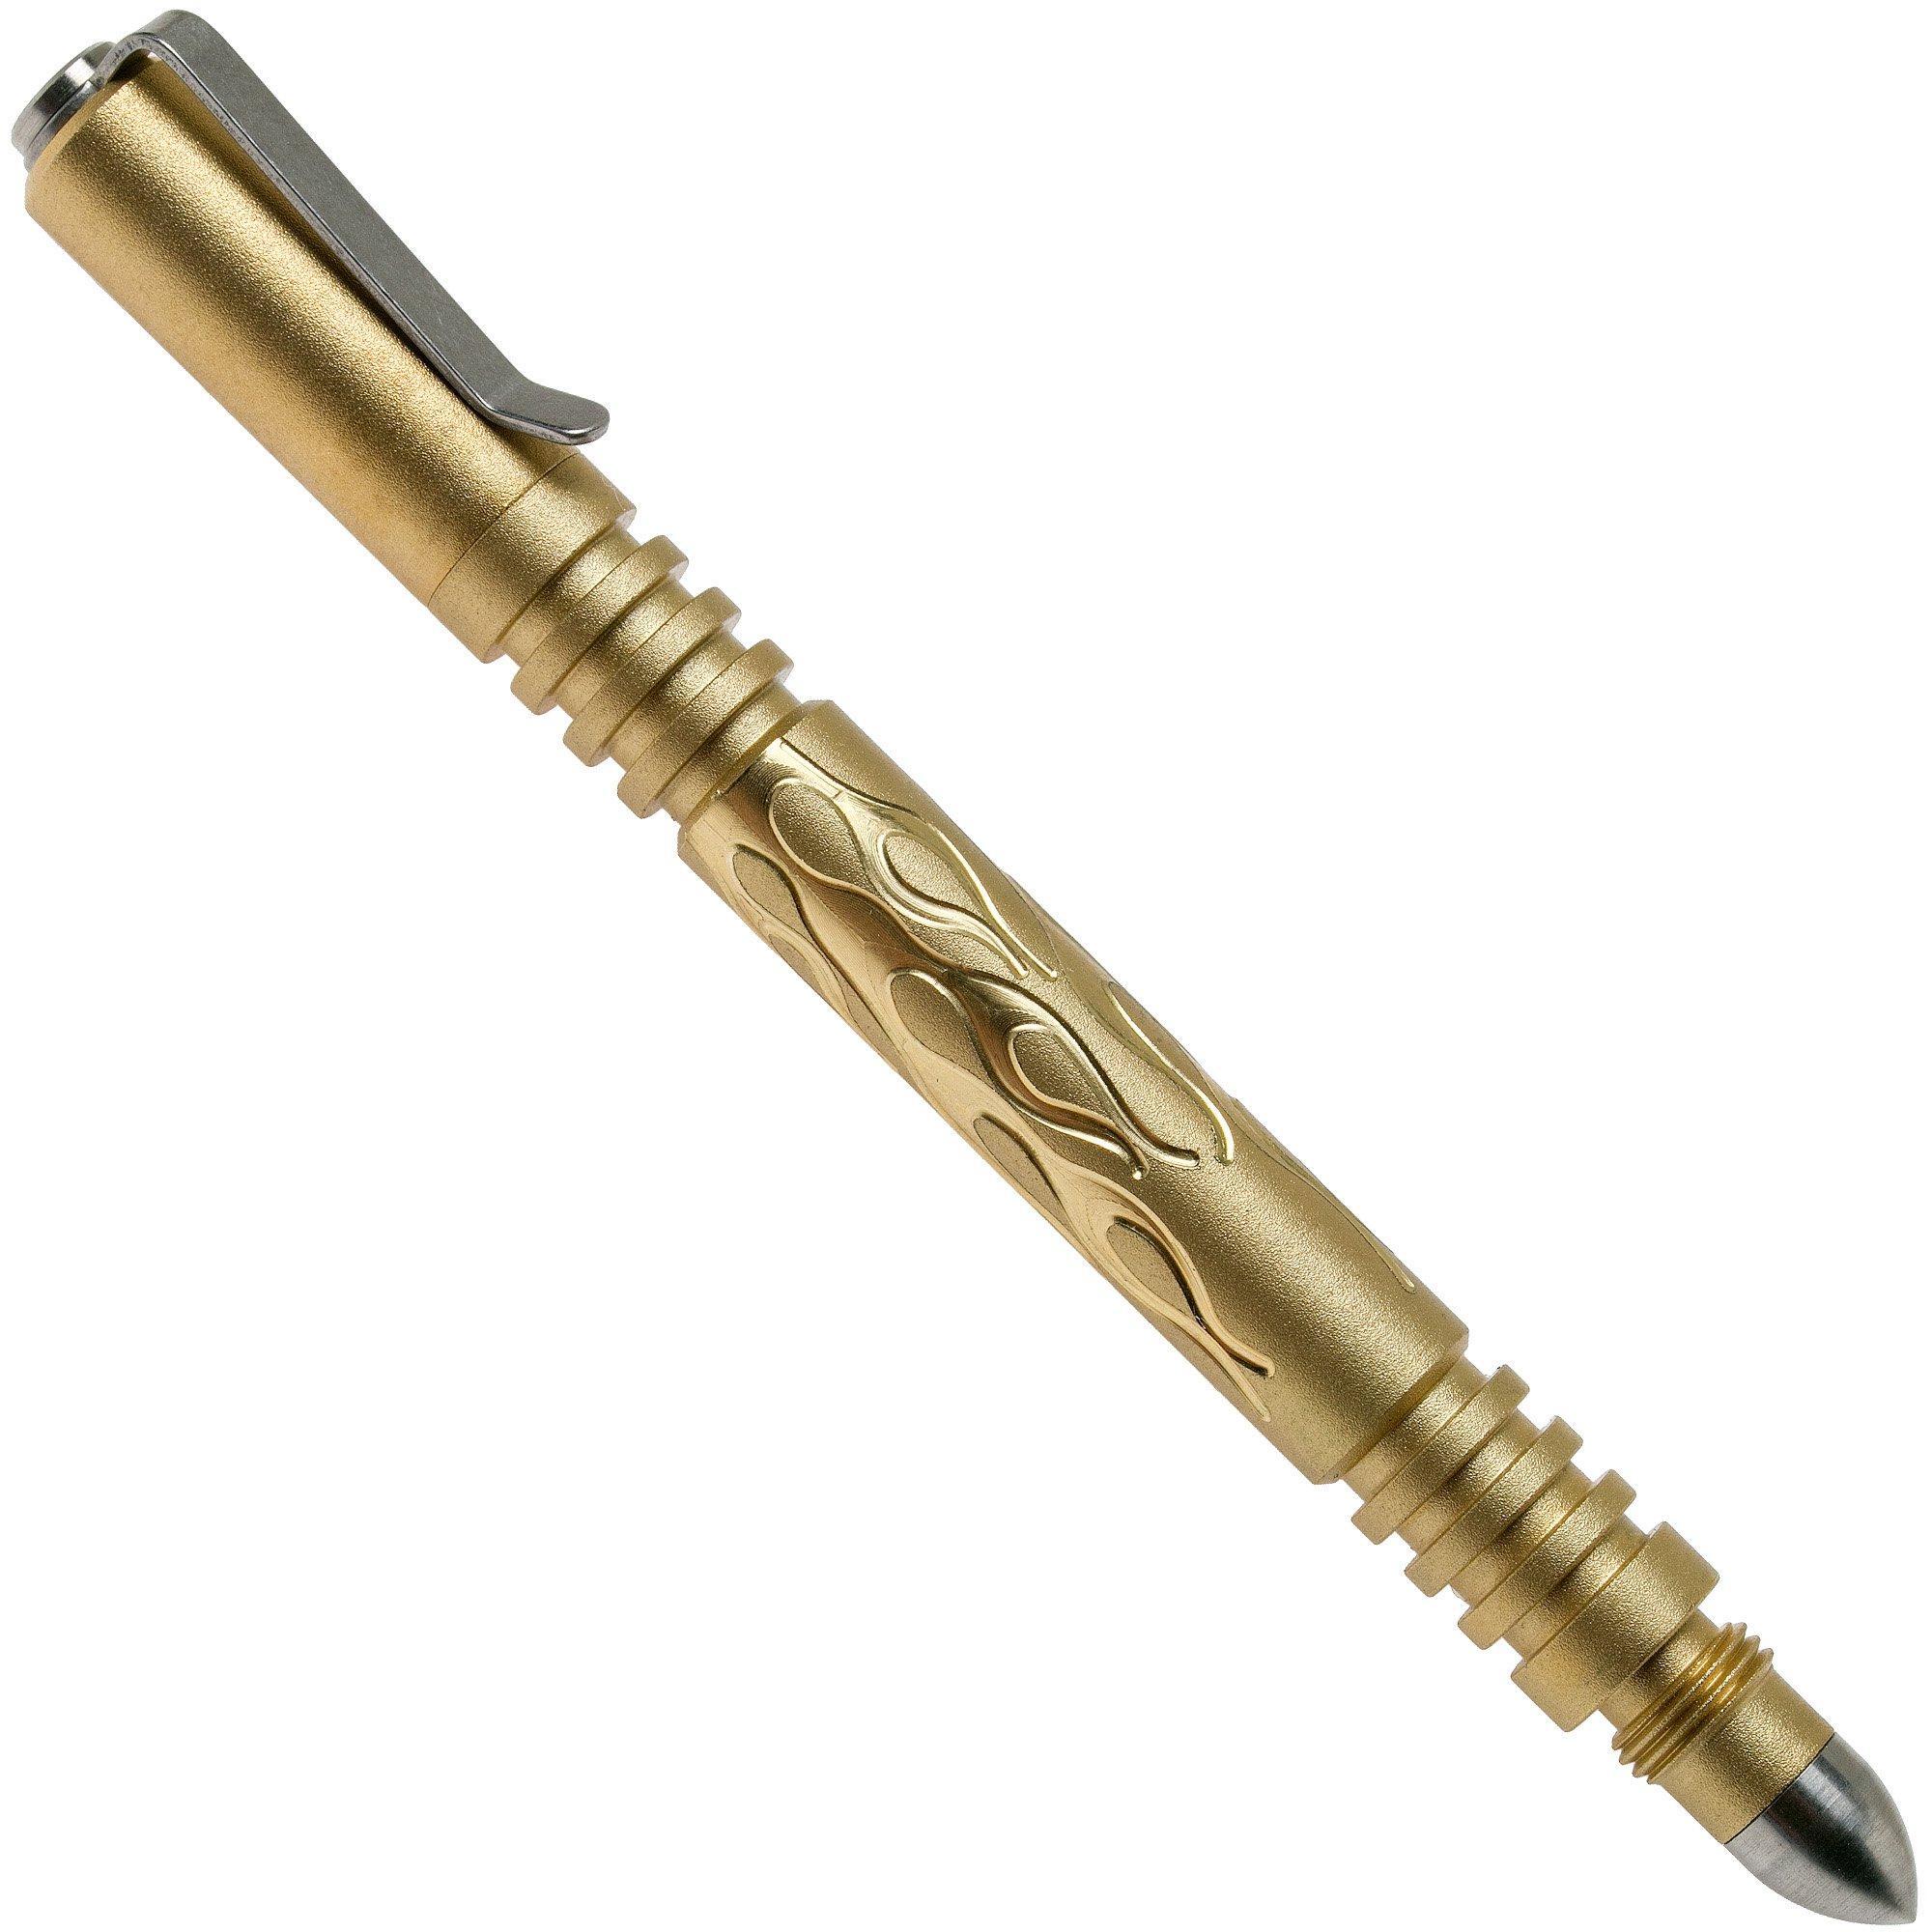 Rick Hinderer Rick Hinderer Investigator Pen Flames Brass/Messing, beadblasted, tactische pen